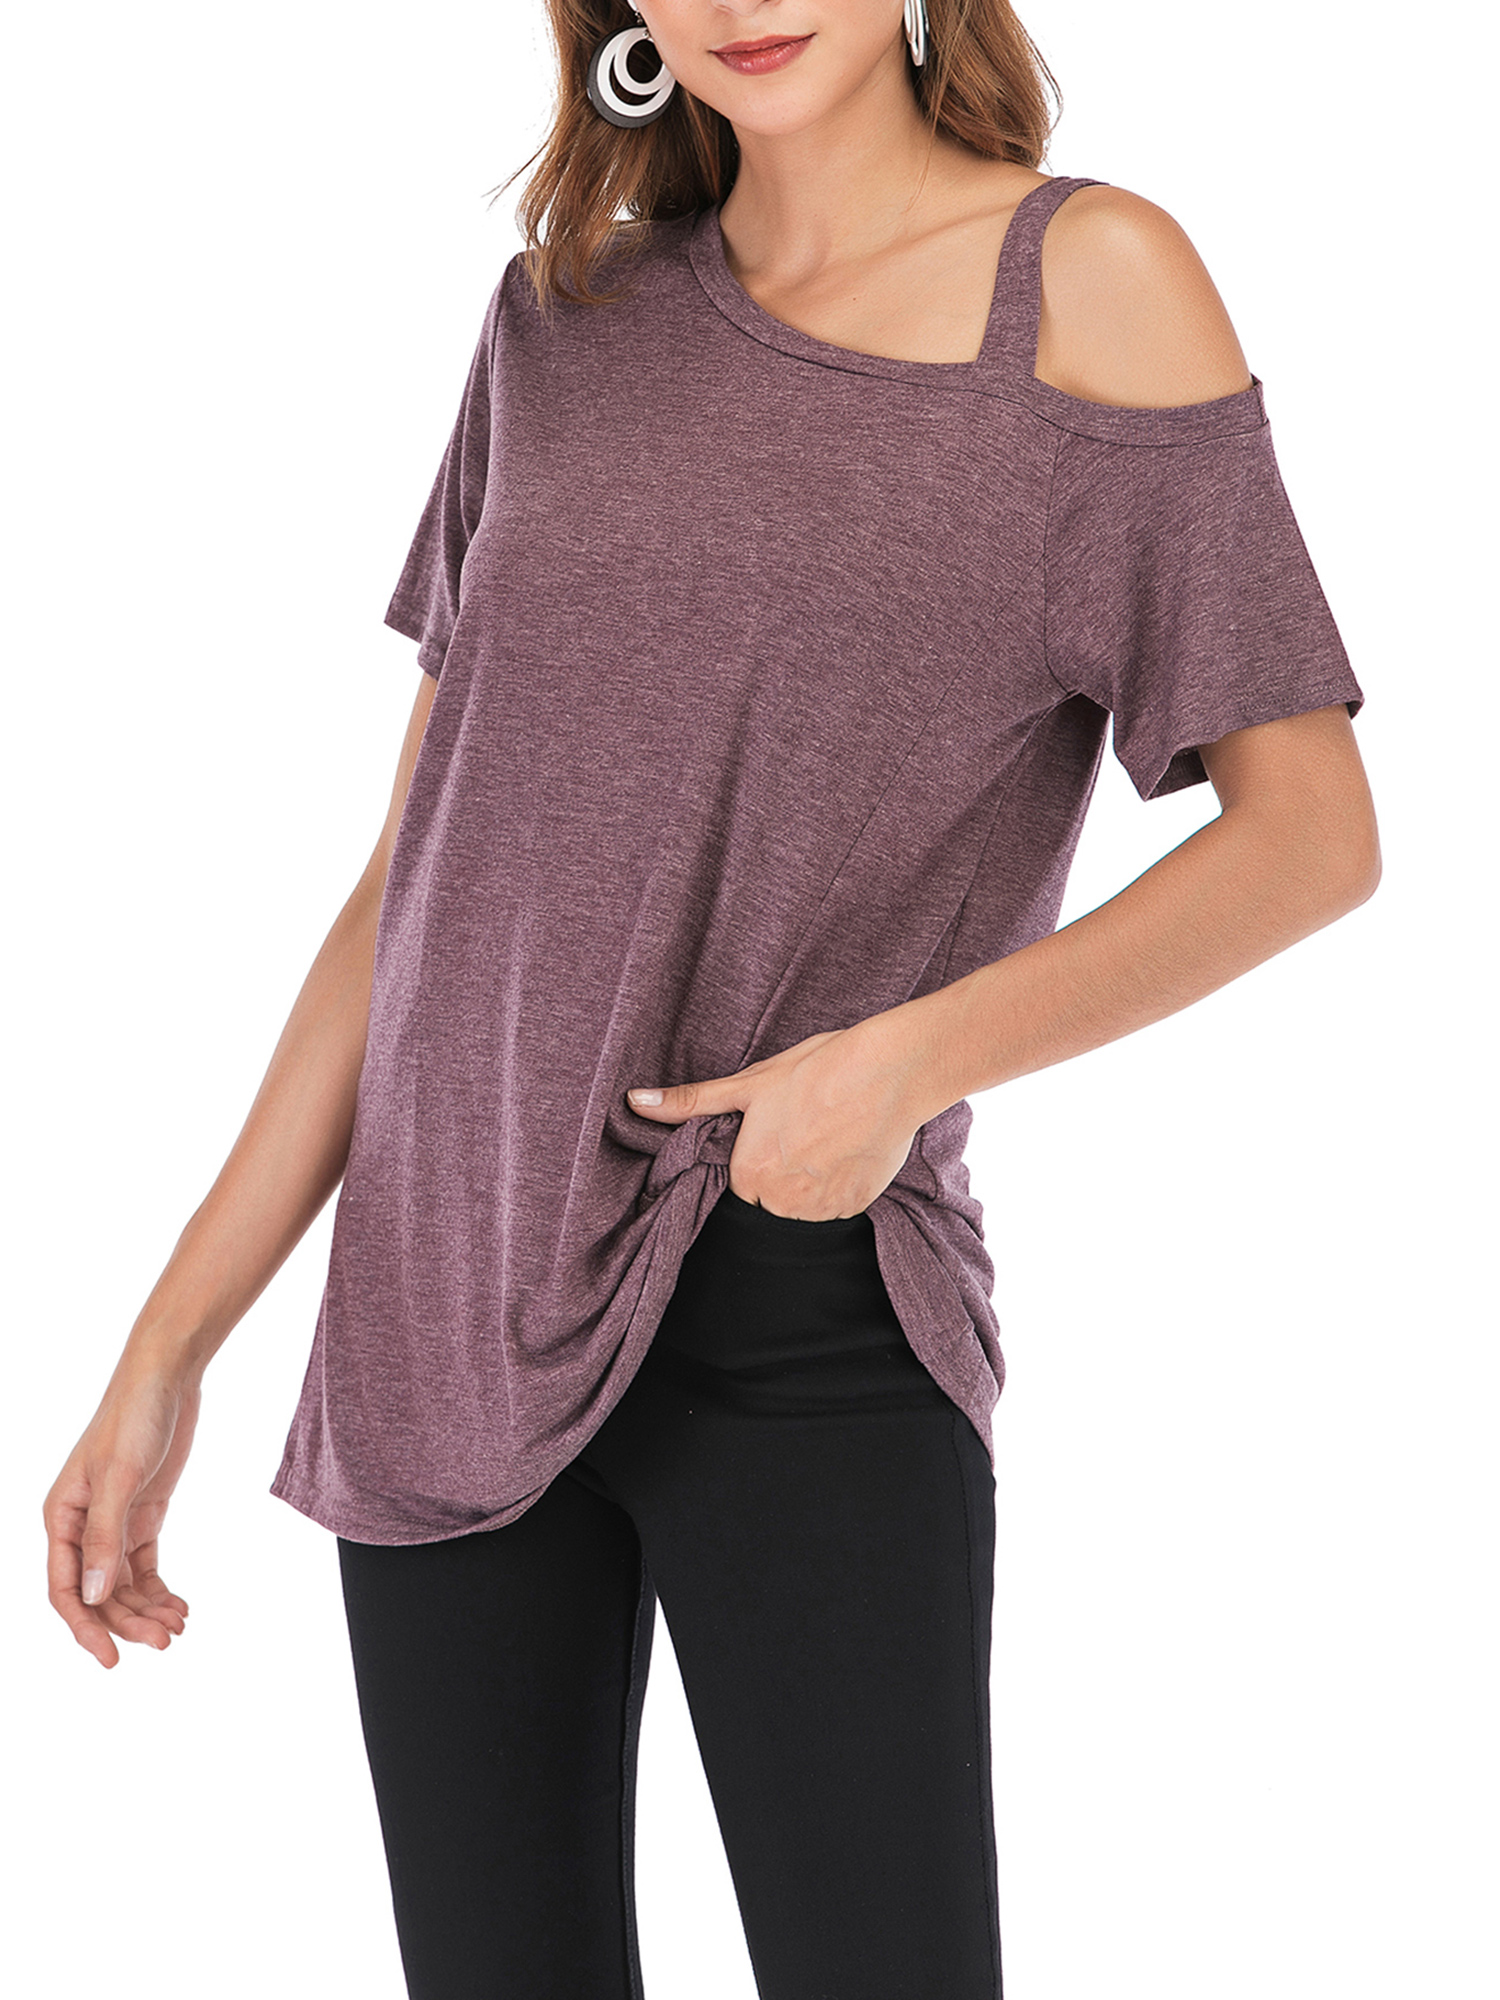 SAYFUT Women's Cold Shoulder T-Shirt  Plus Size Cold Shoulder Tops Short Sleeve Tops Blouse Fashion Knot Twist Front Blouse Tunic Tops S-2XL - image 4 of 8